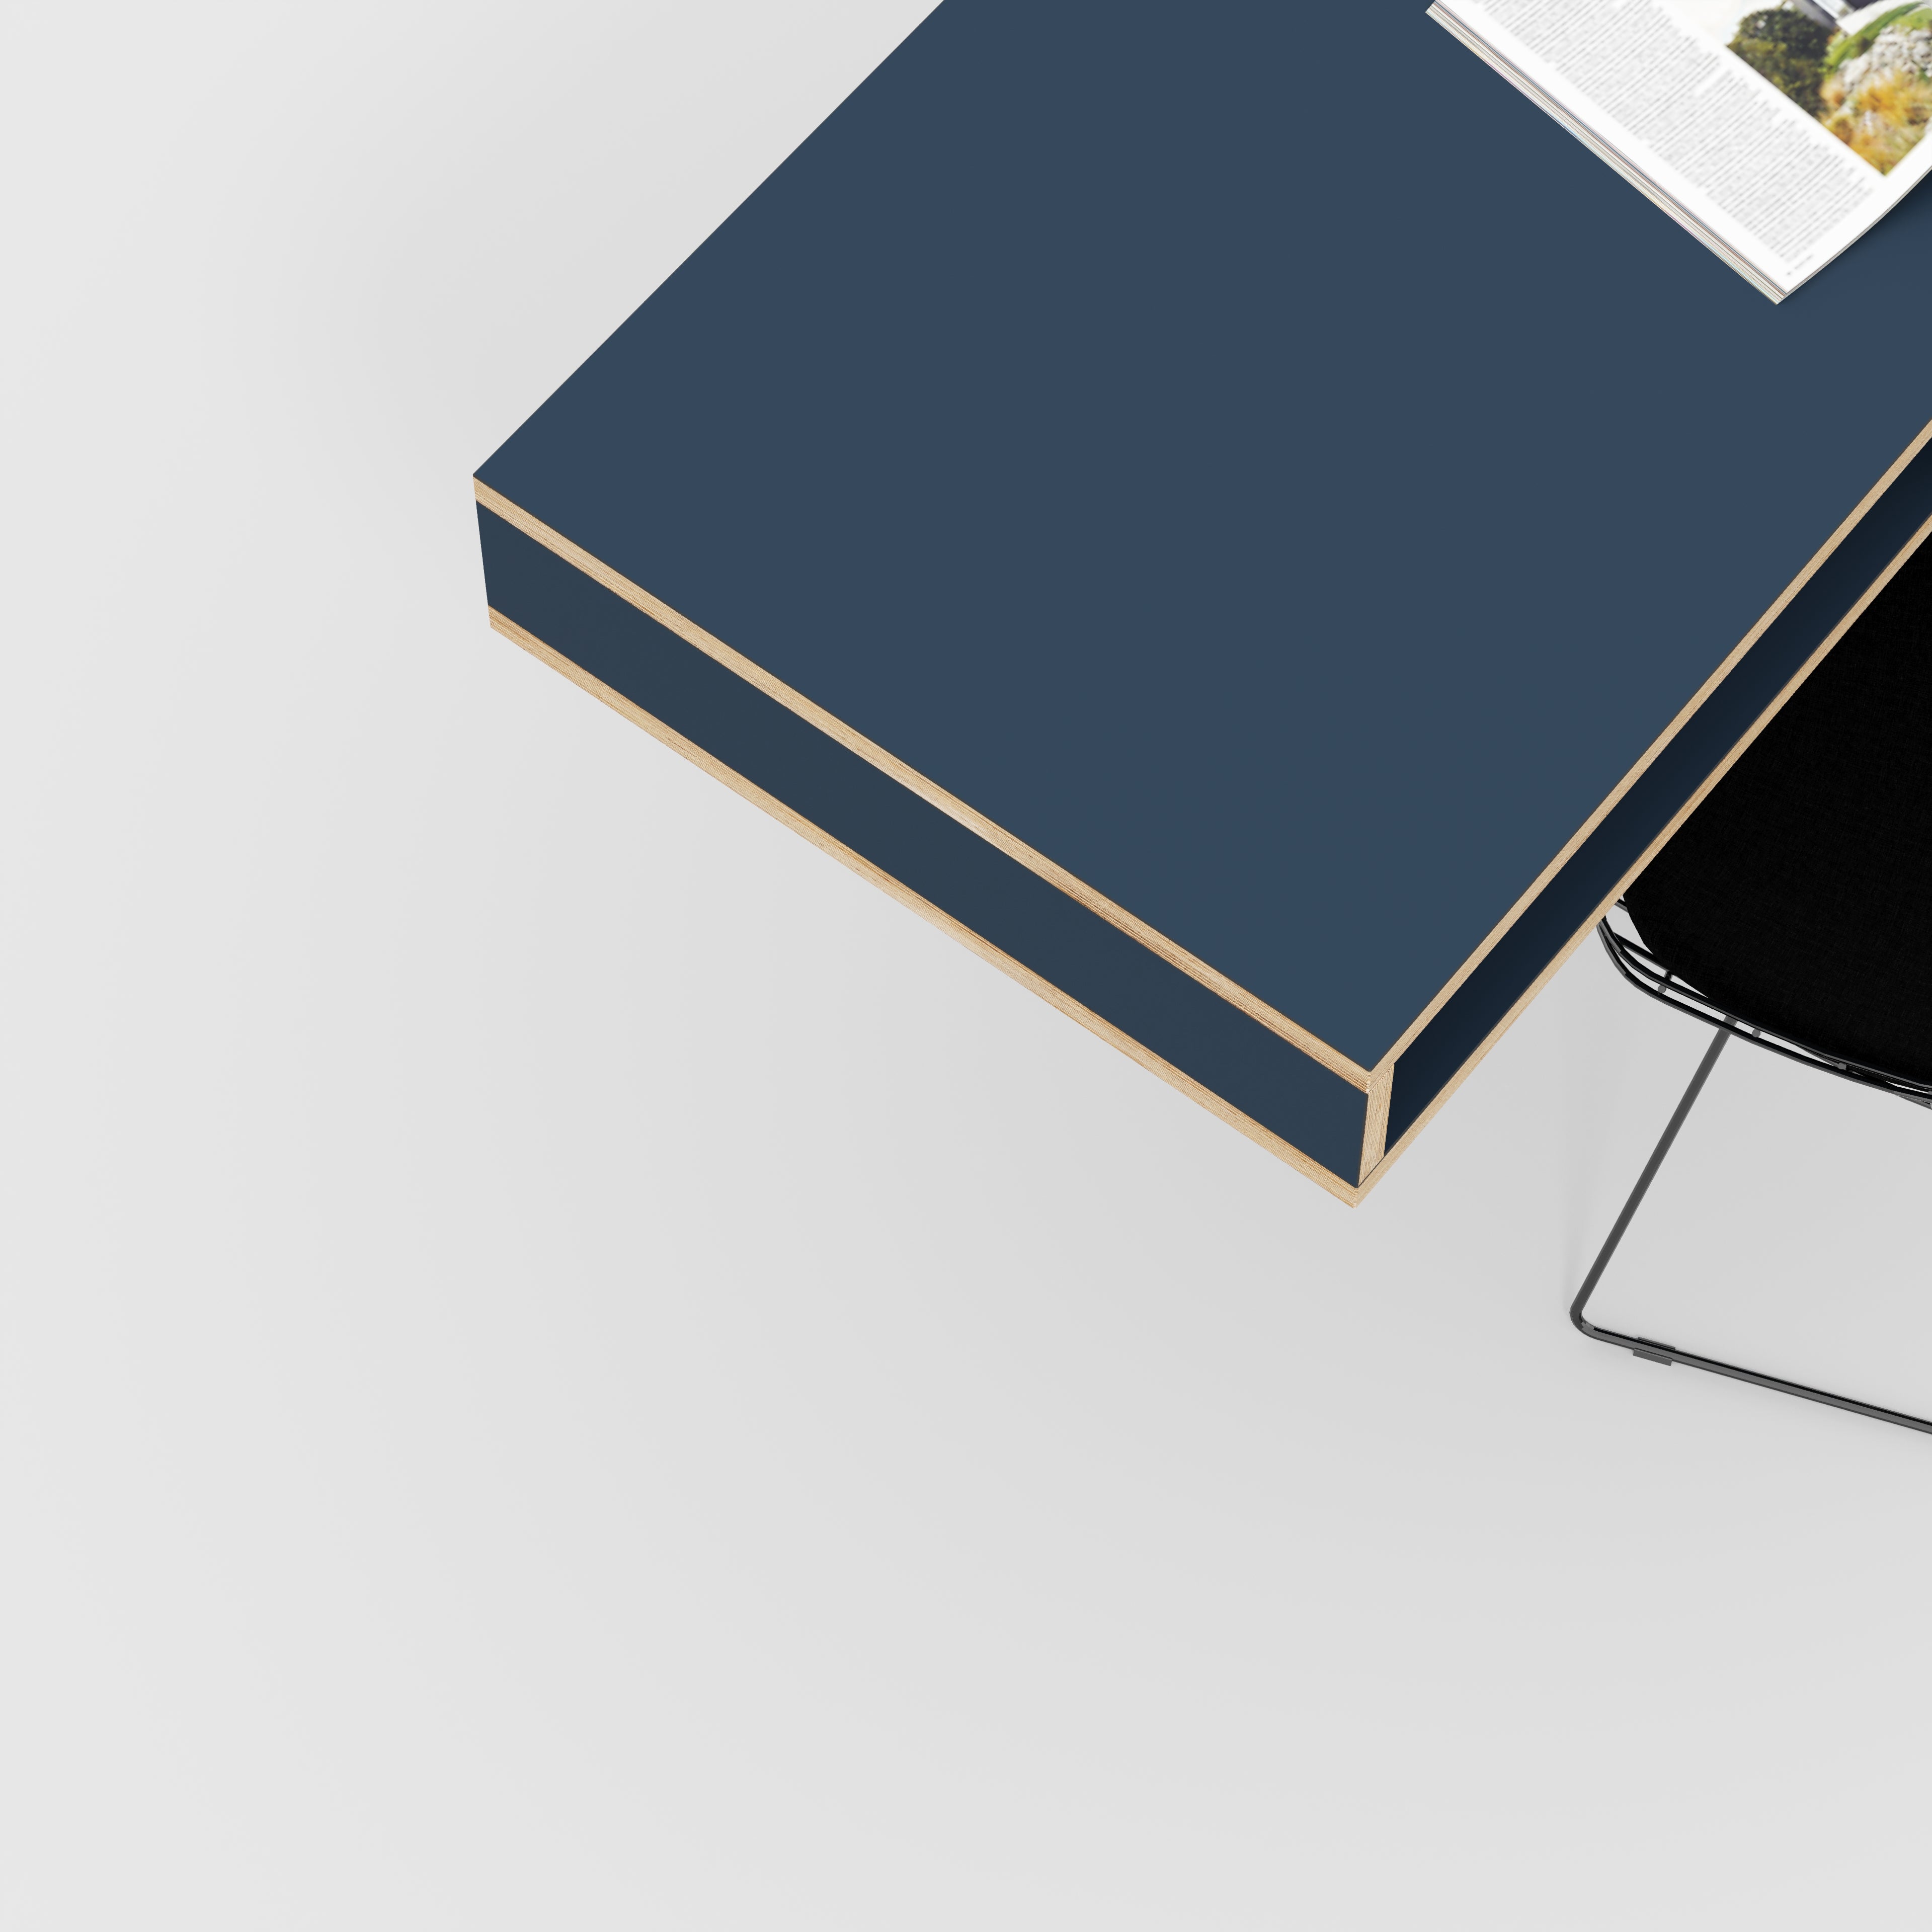 Plywood Desktop with Storage - Formica Night Sea Blue - 1200(w) x 600(d) x 150(h)